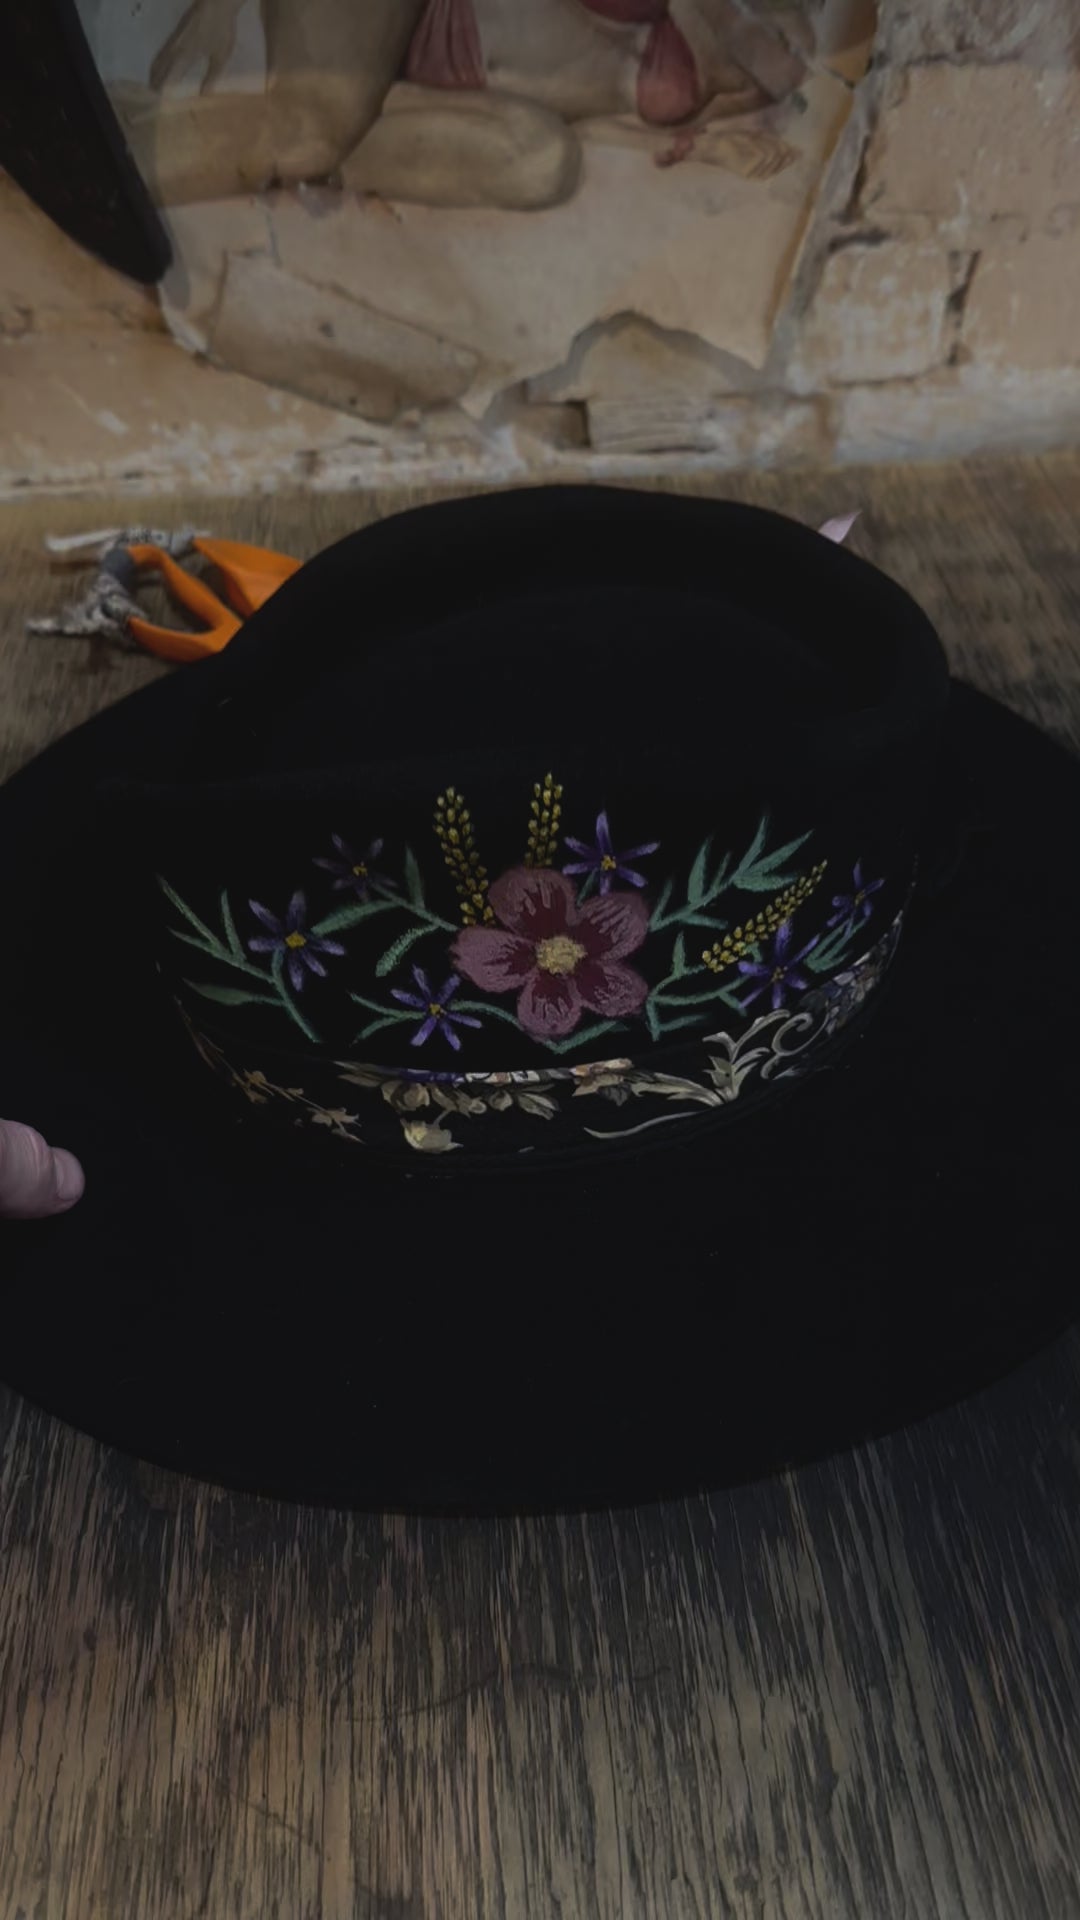 Custom Hat project $ 400